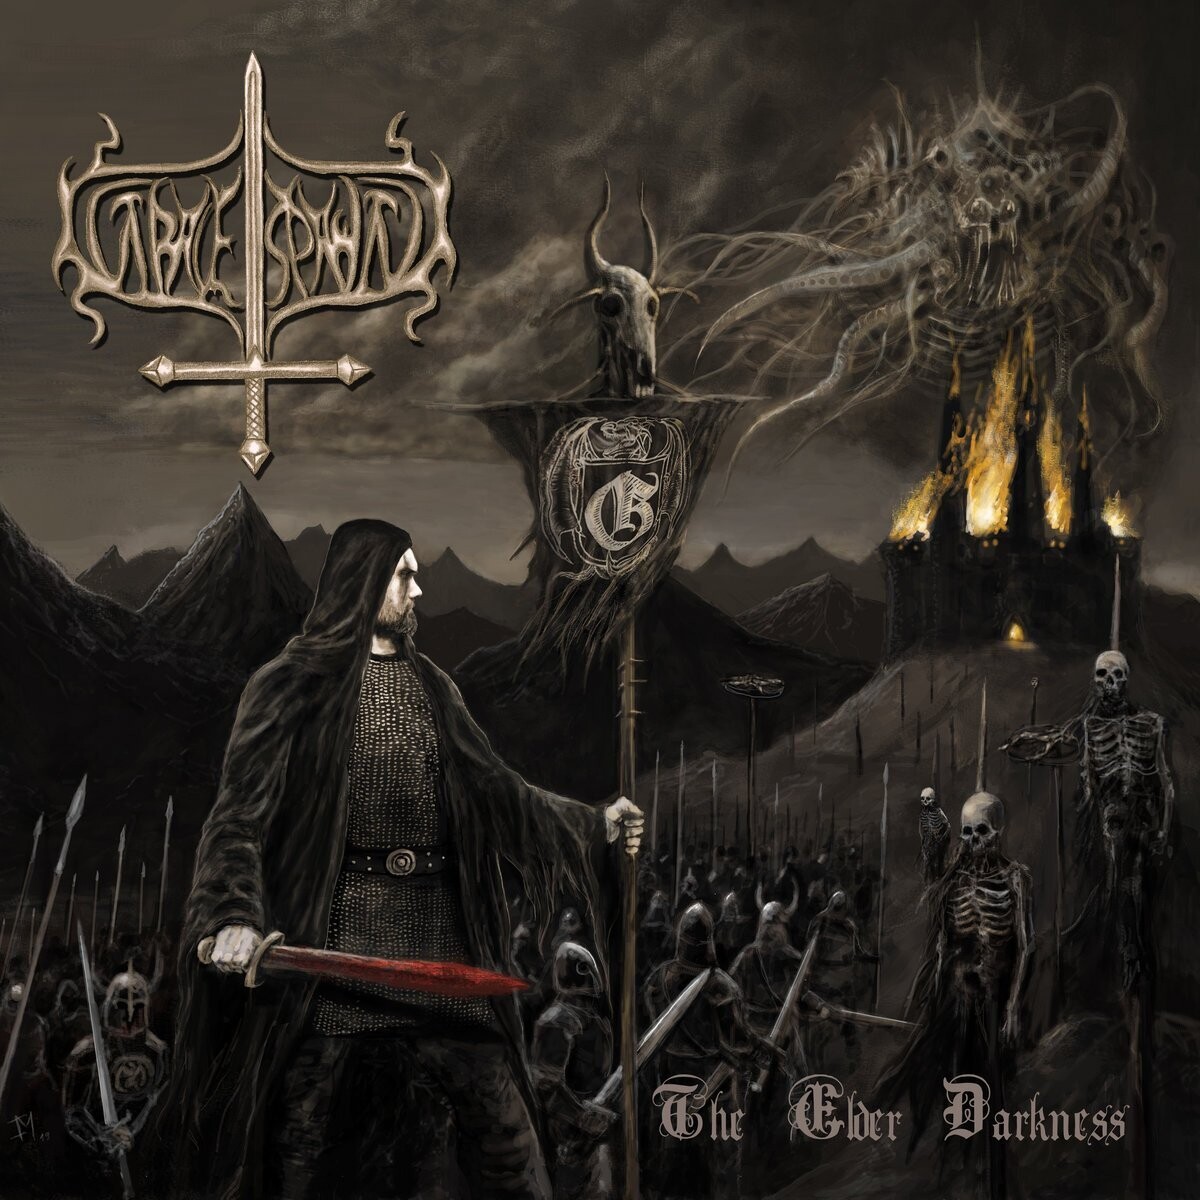 Gravespawn - The Elder Darkness | Black Metal CD